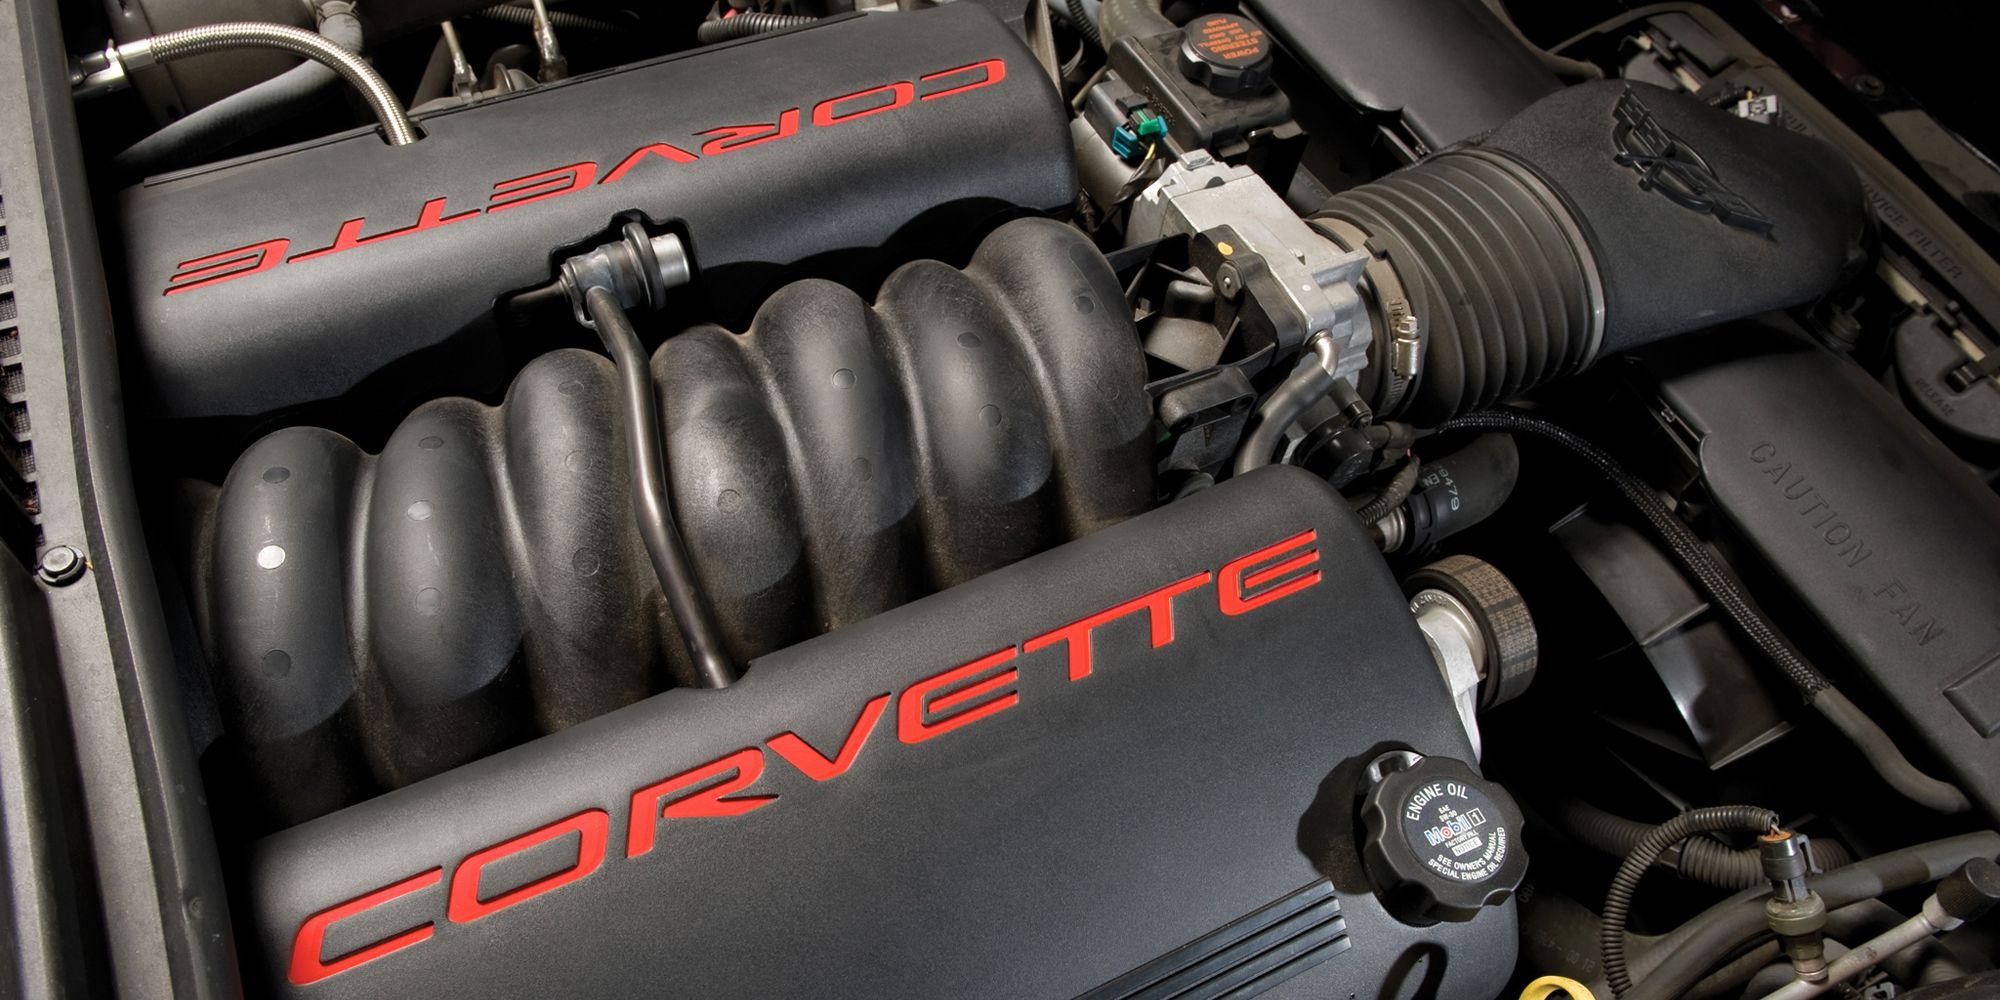 The engine in the C5 Corvette